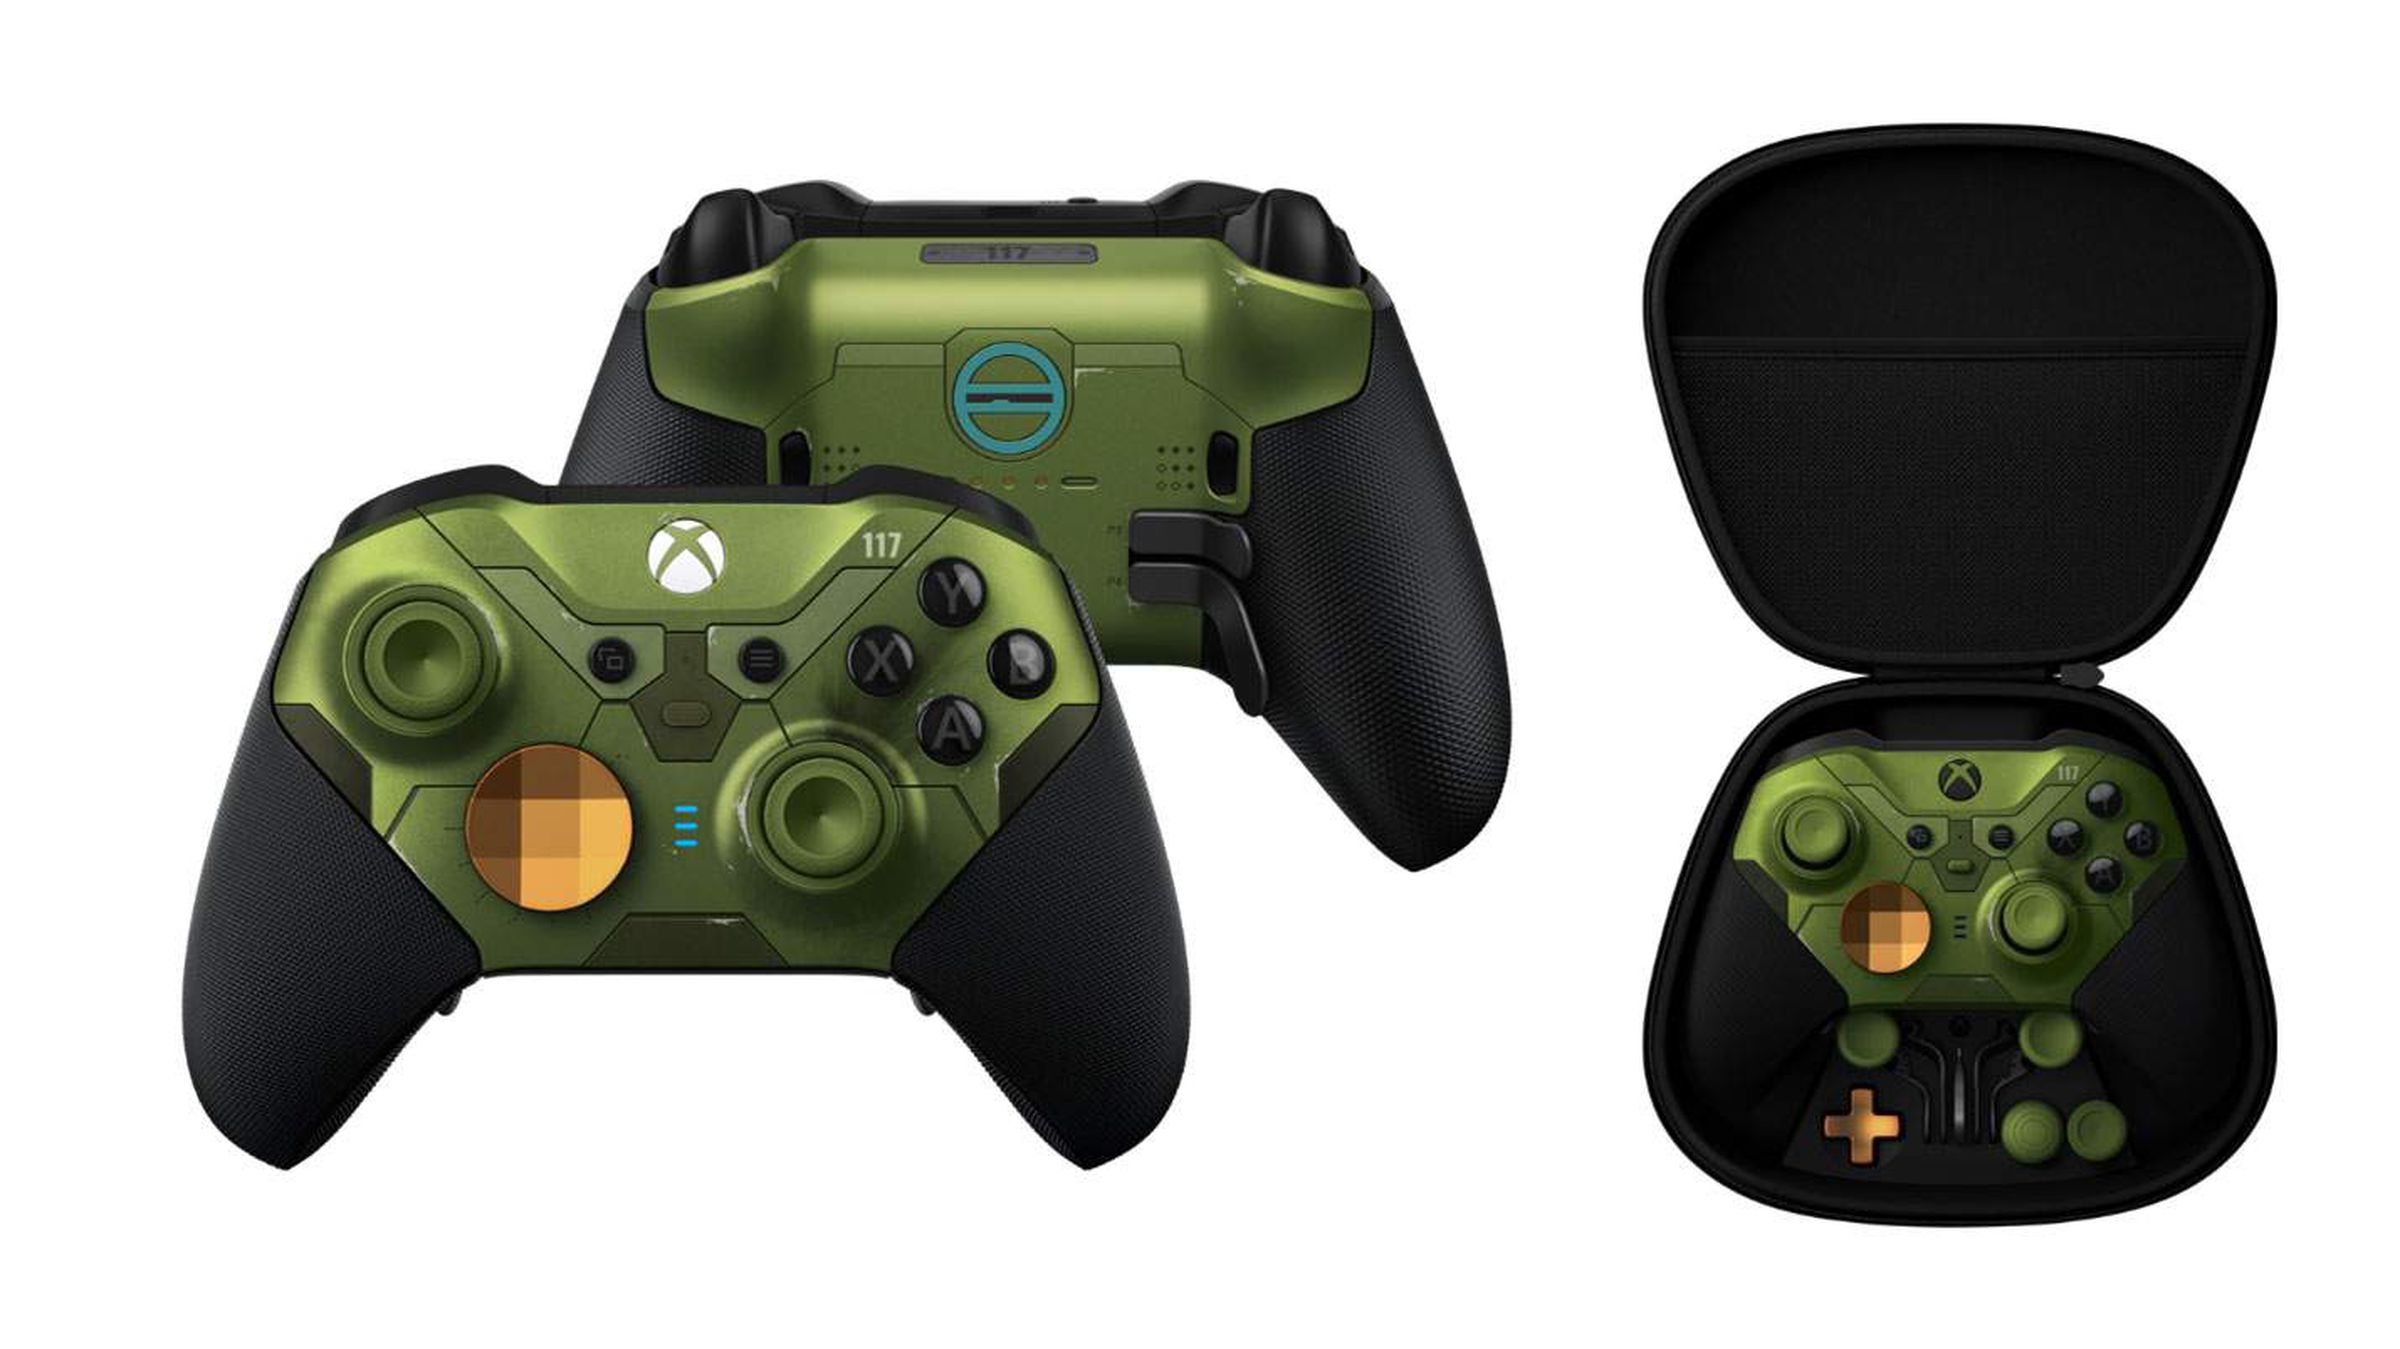 The Halo-themed Xbox Elite 2 controller.